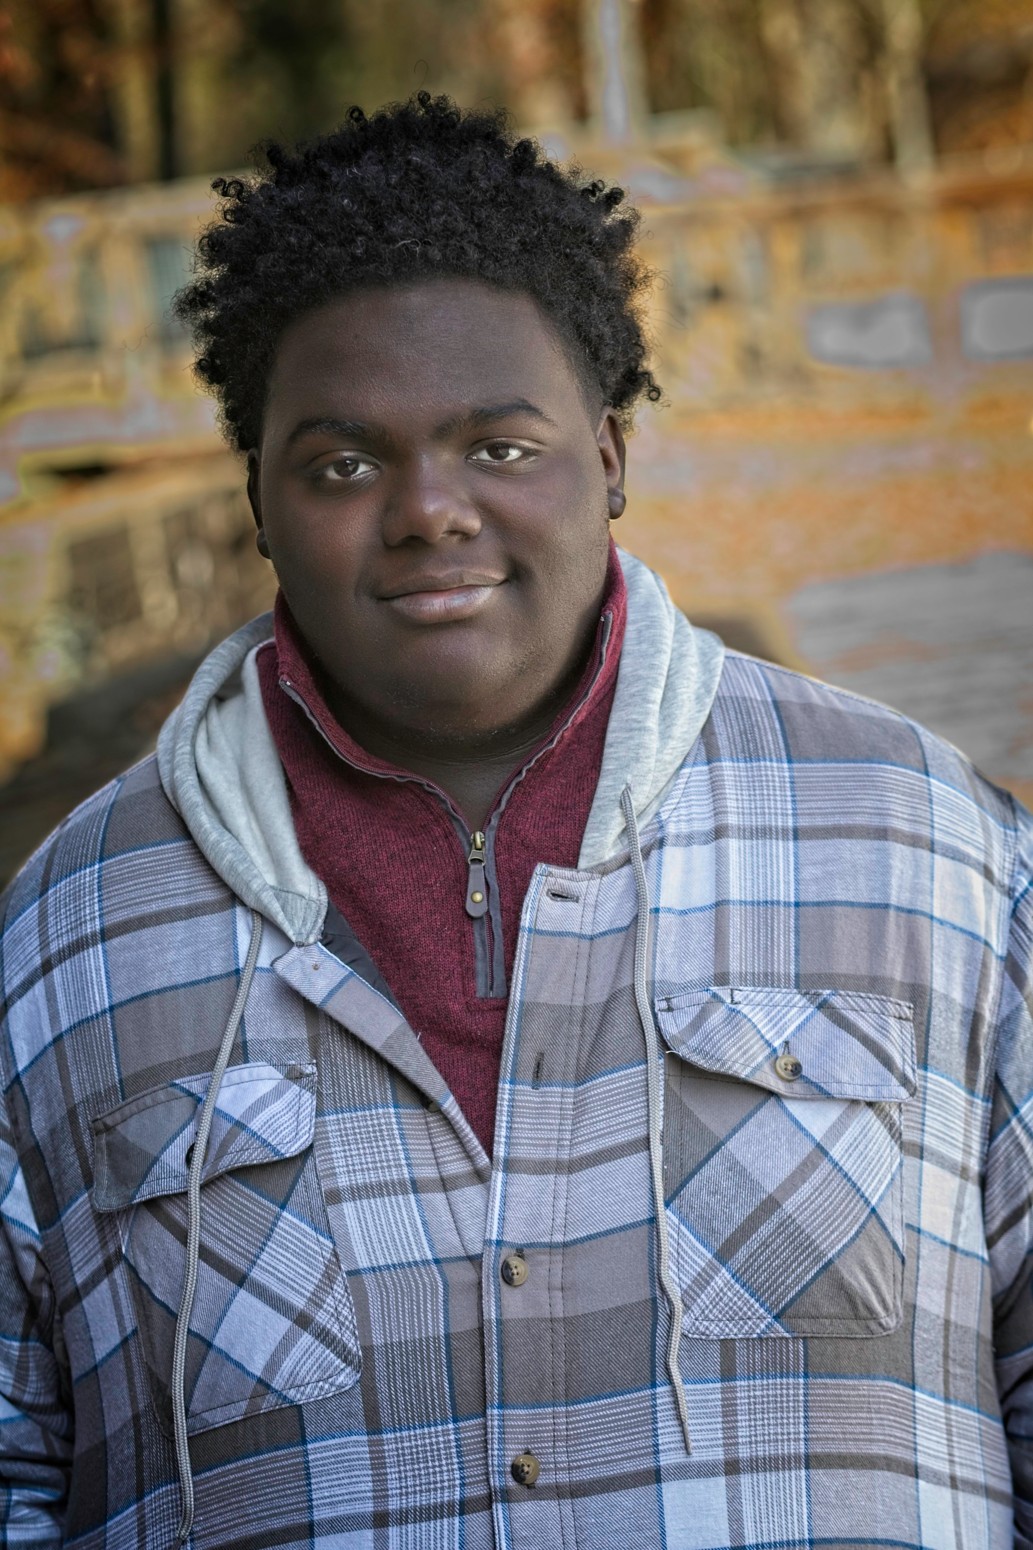 Portrait of a black teen boy